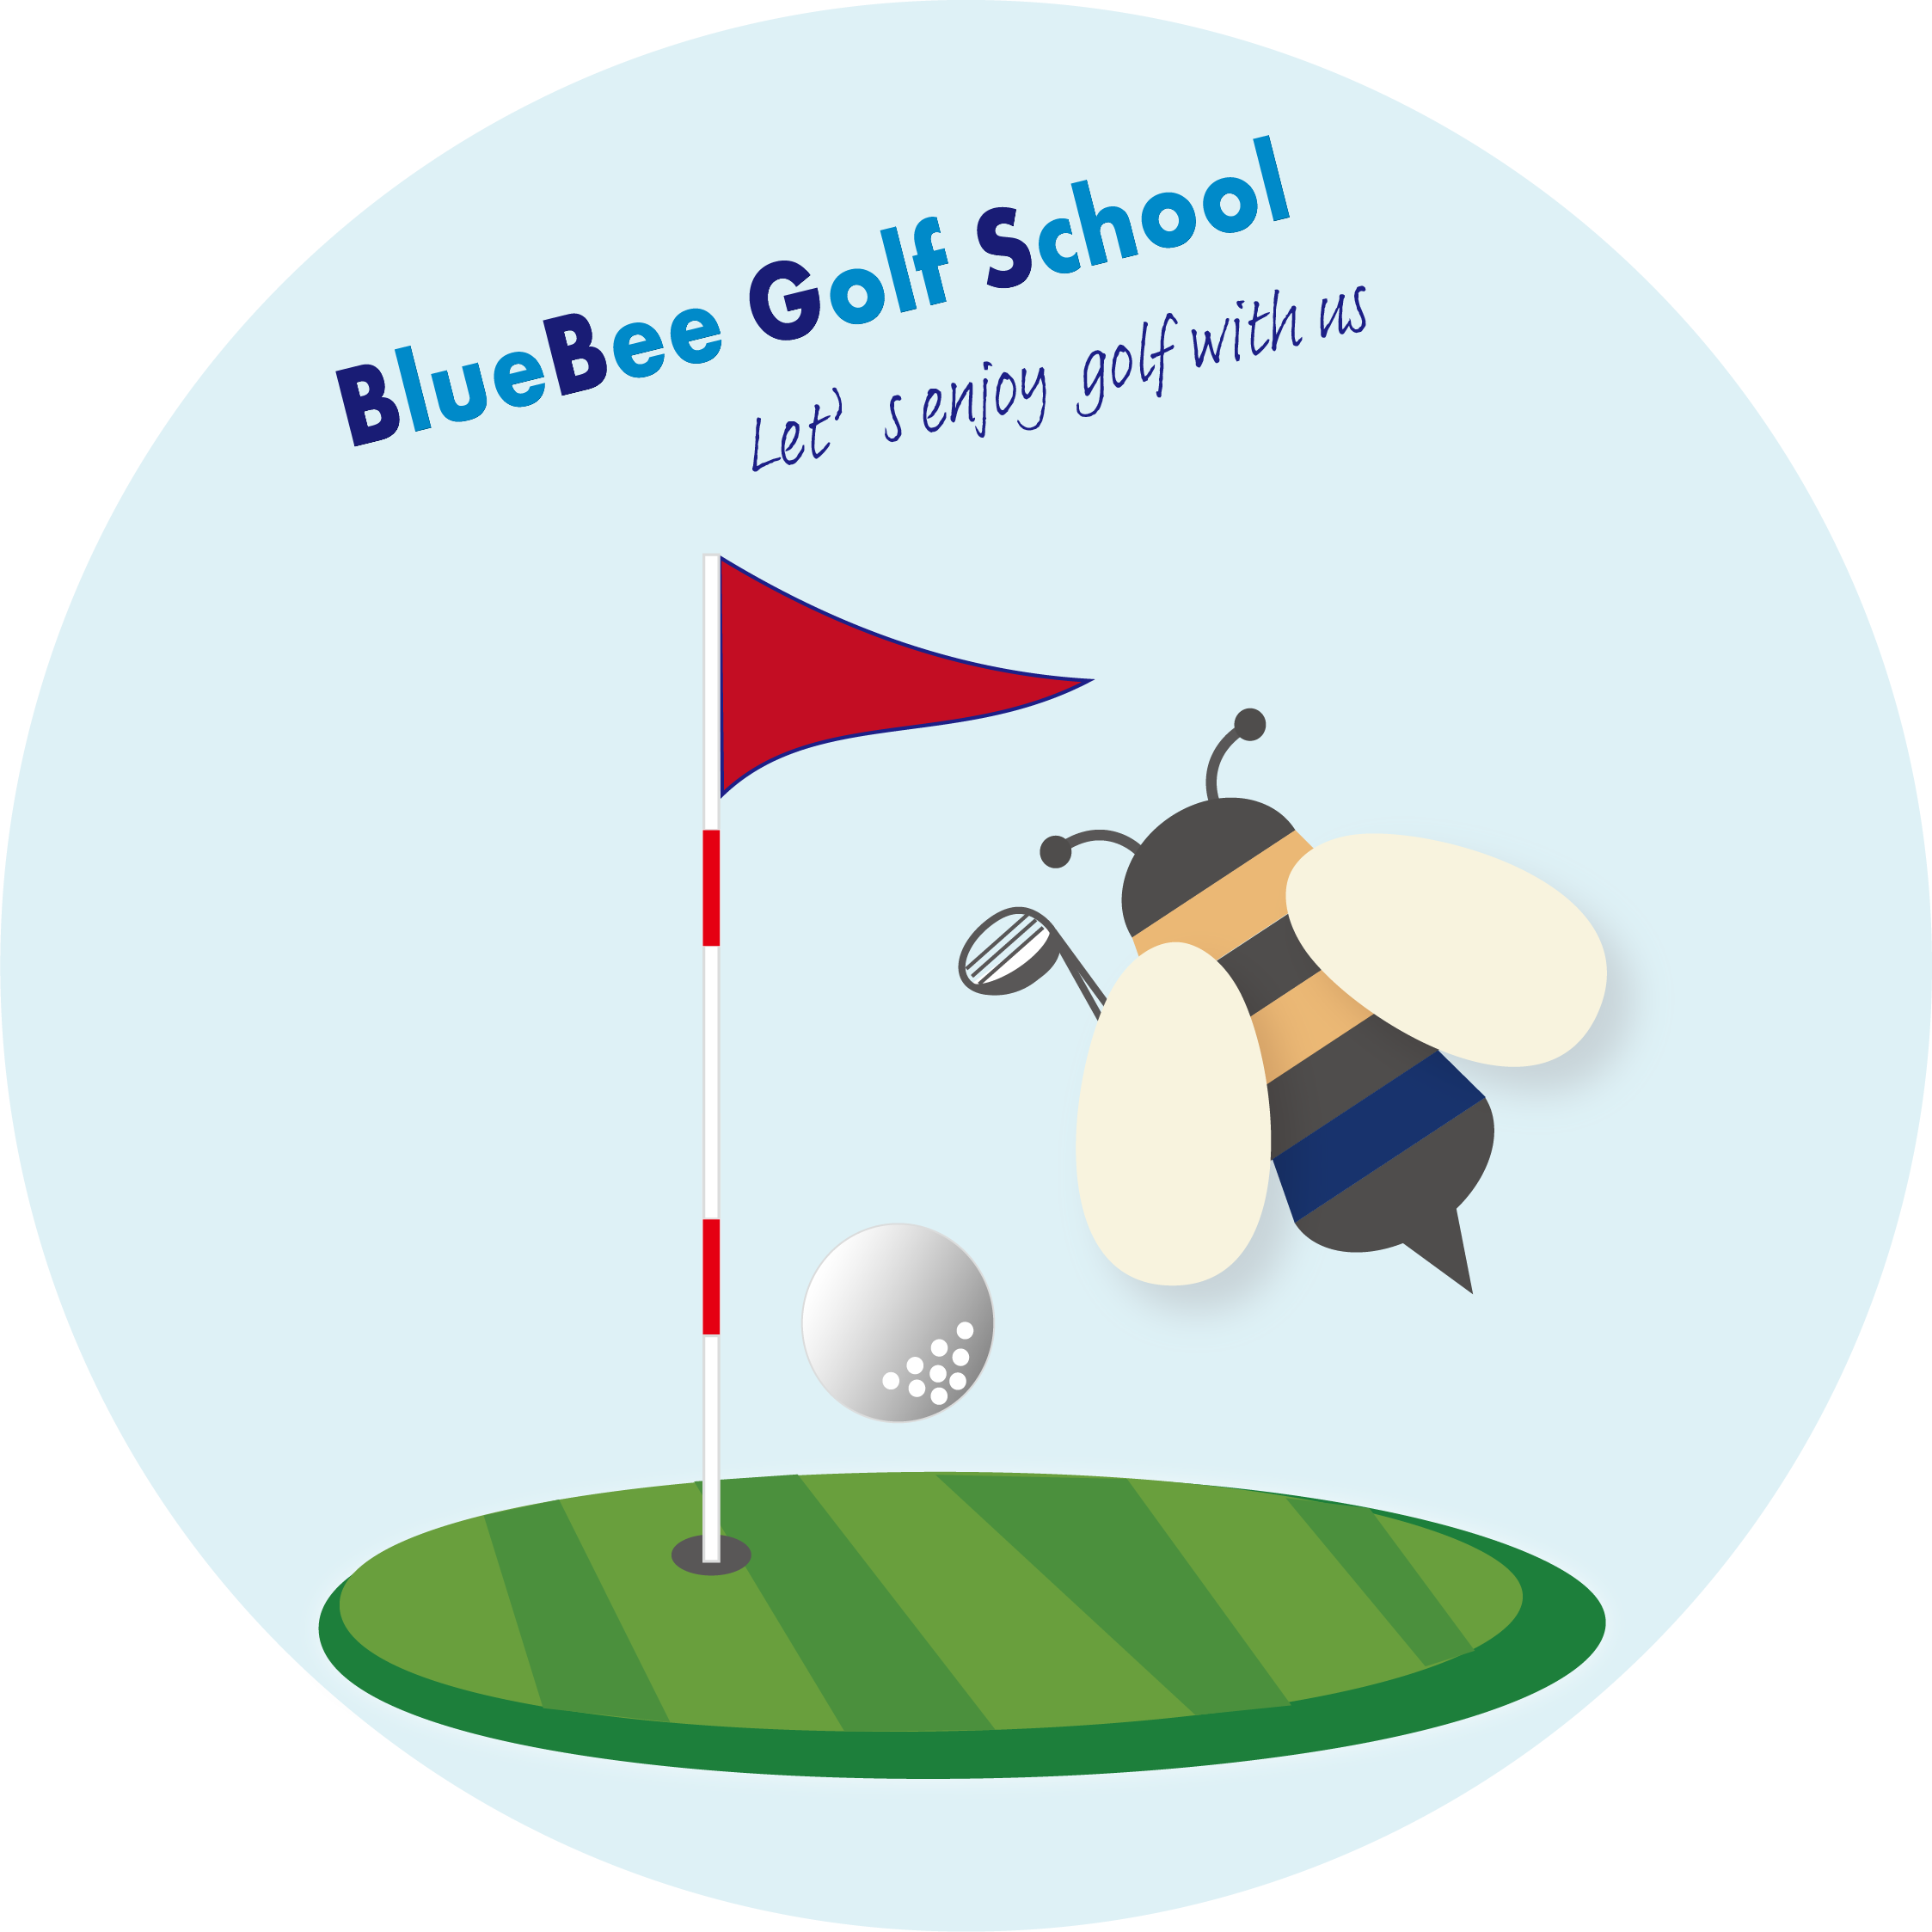 BlueBee Golf School